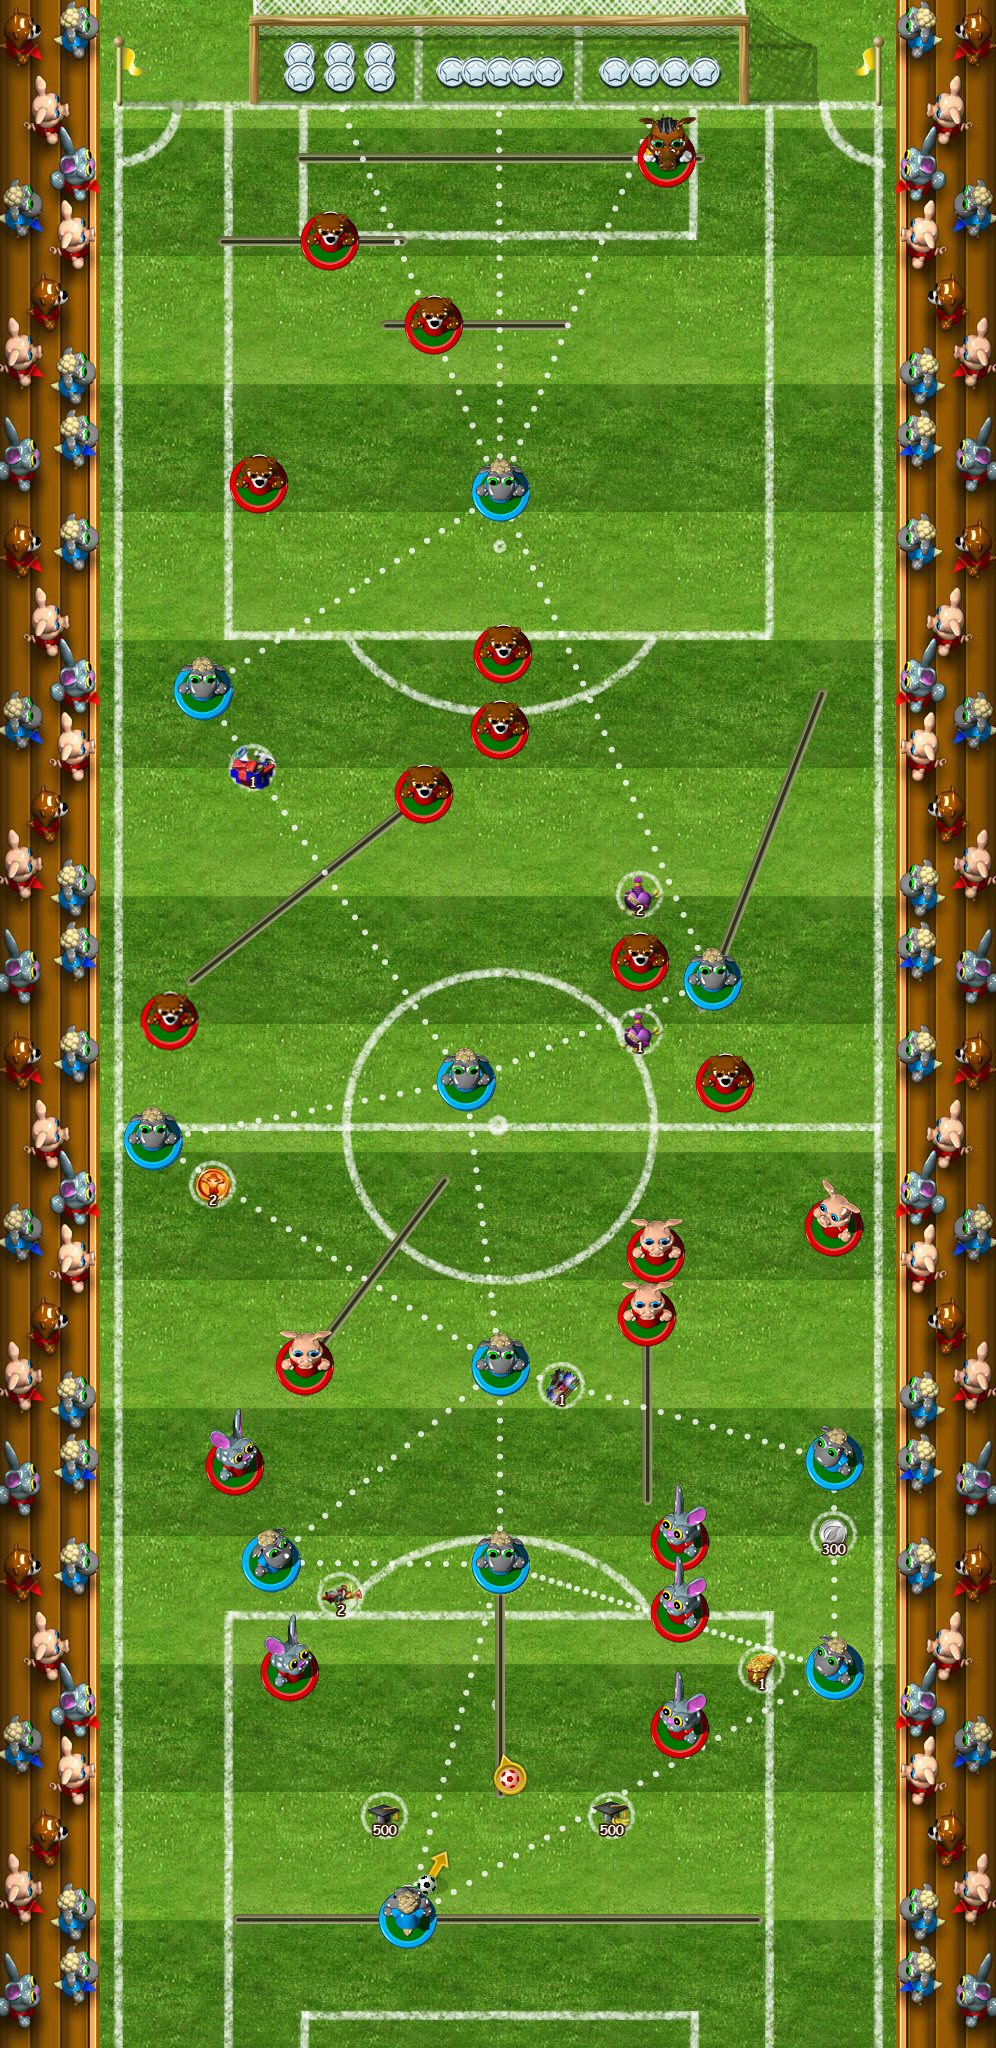 soccerjul2019_layout5.jpg